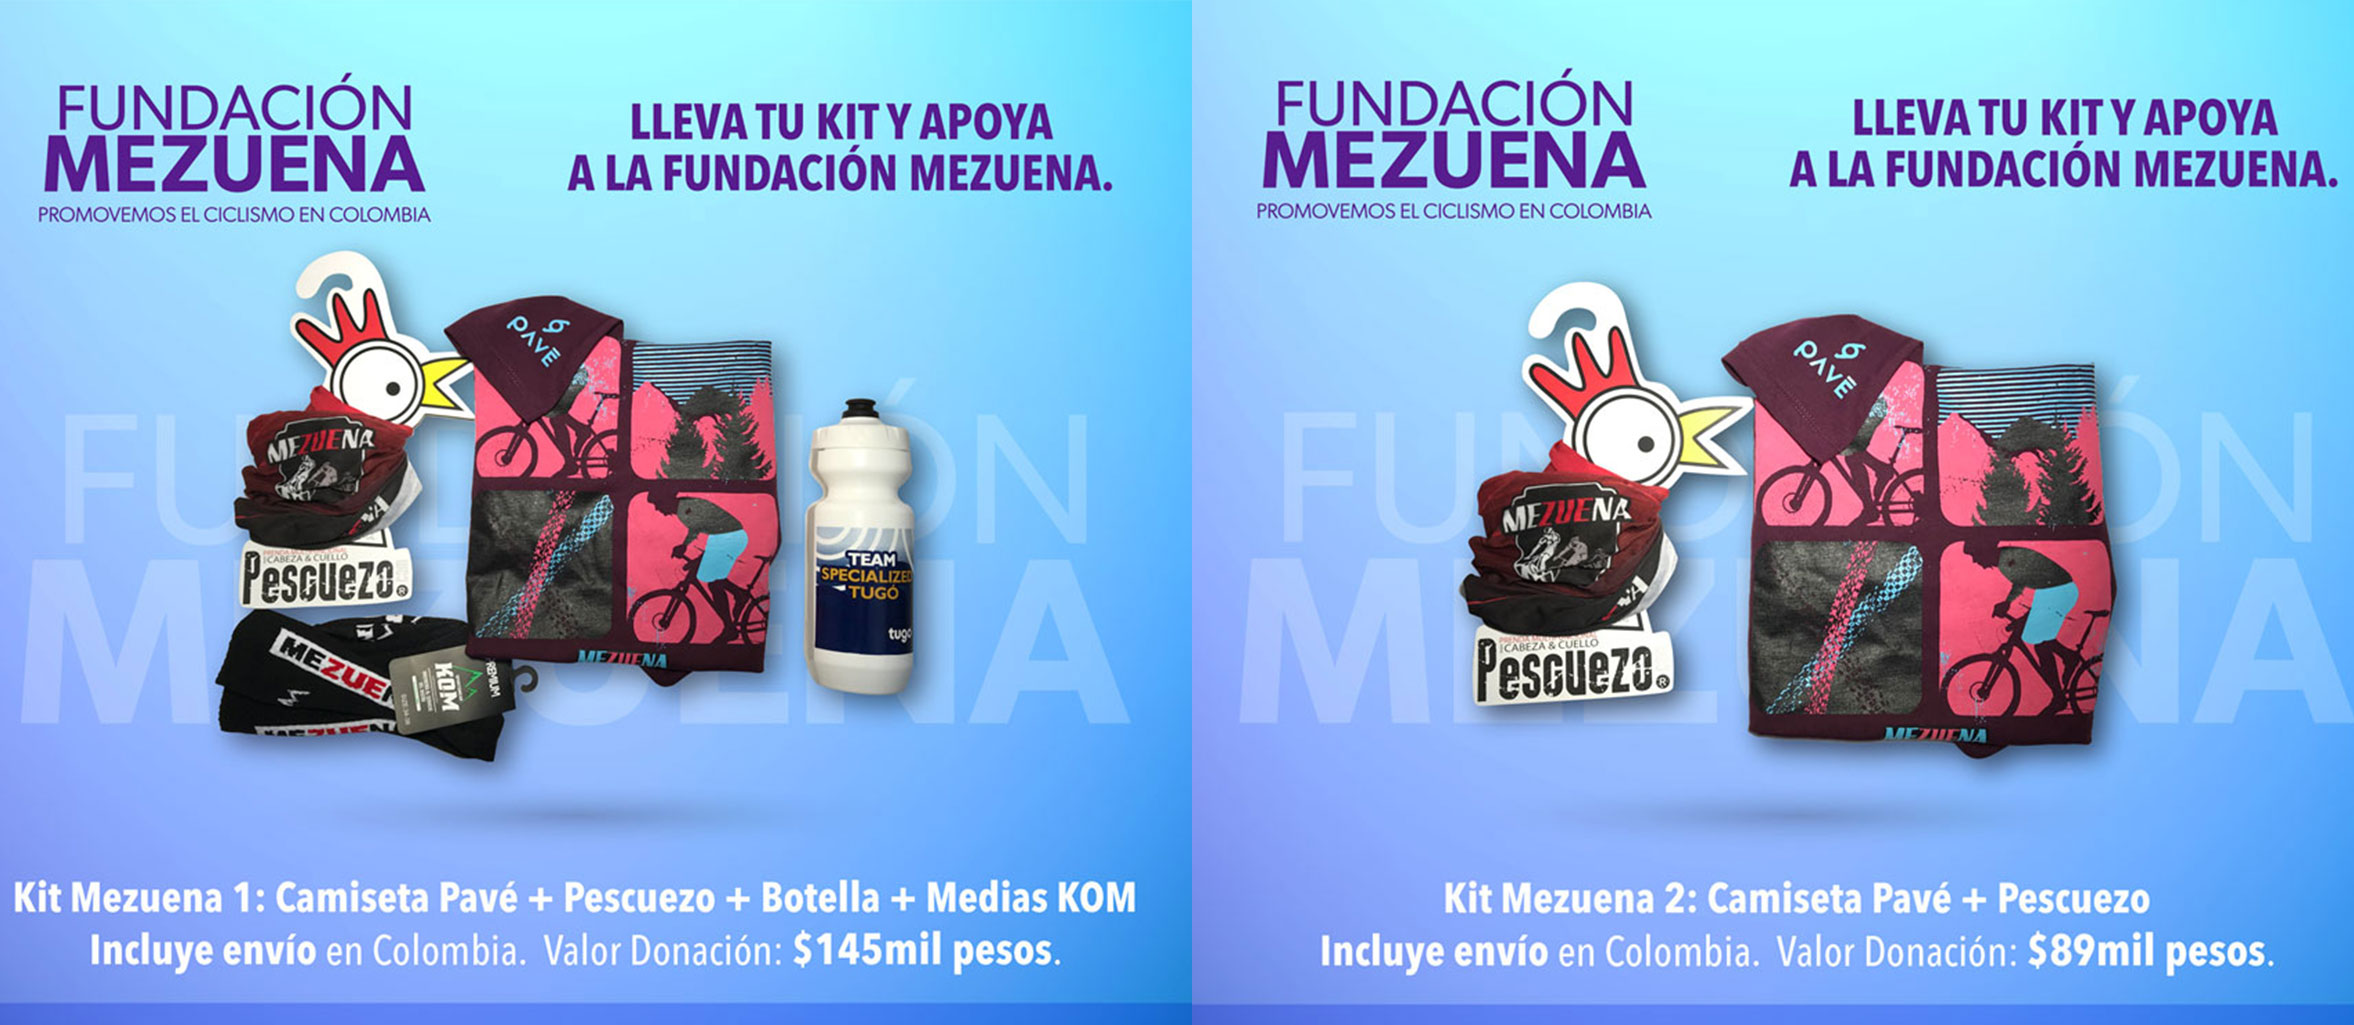 APÓYANOS: Comprando un KIT Fundación Mezuena 2020